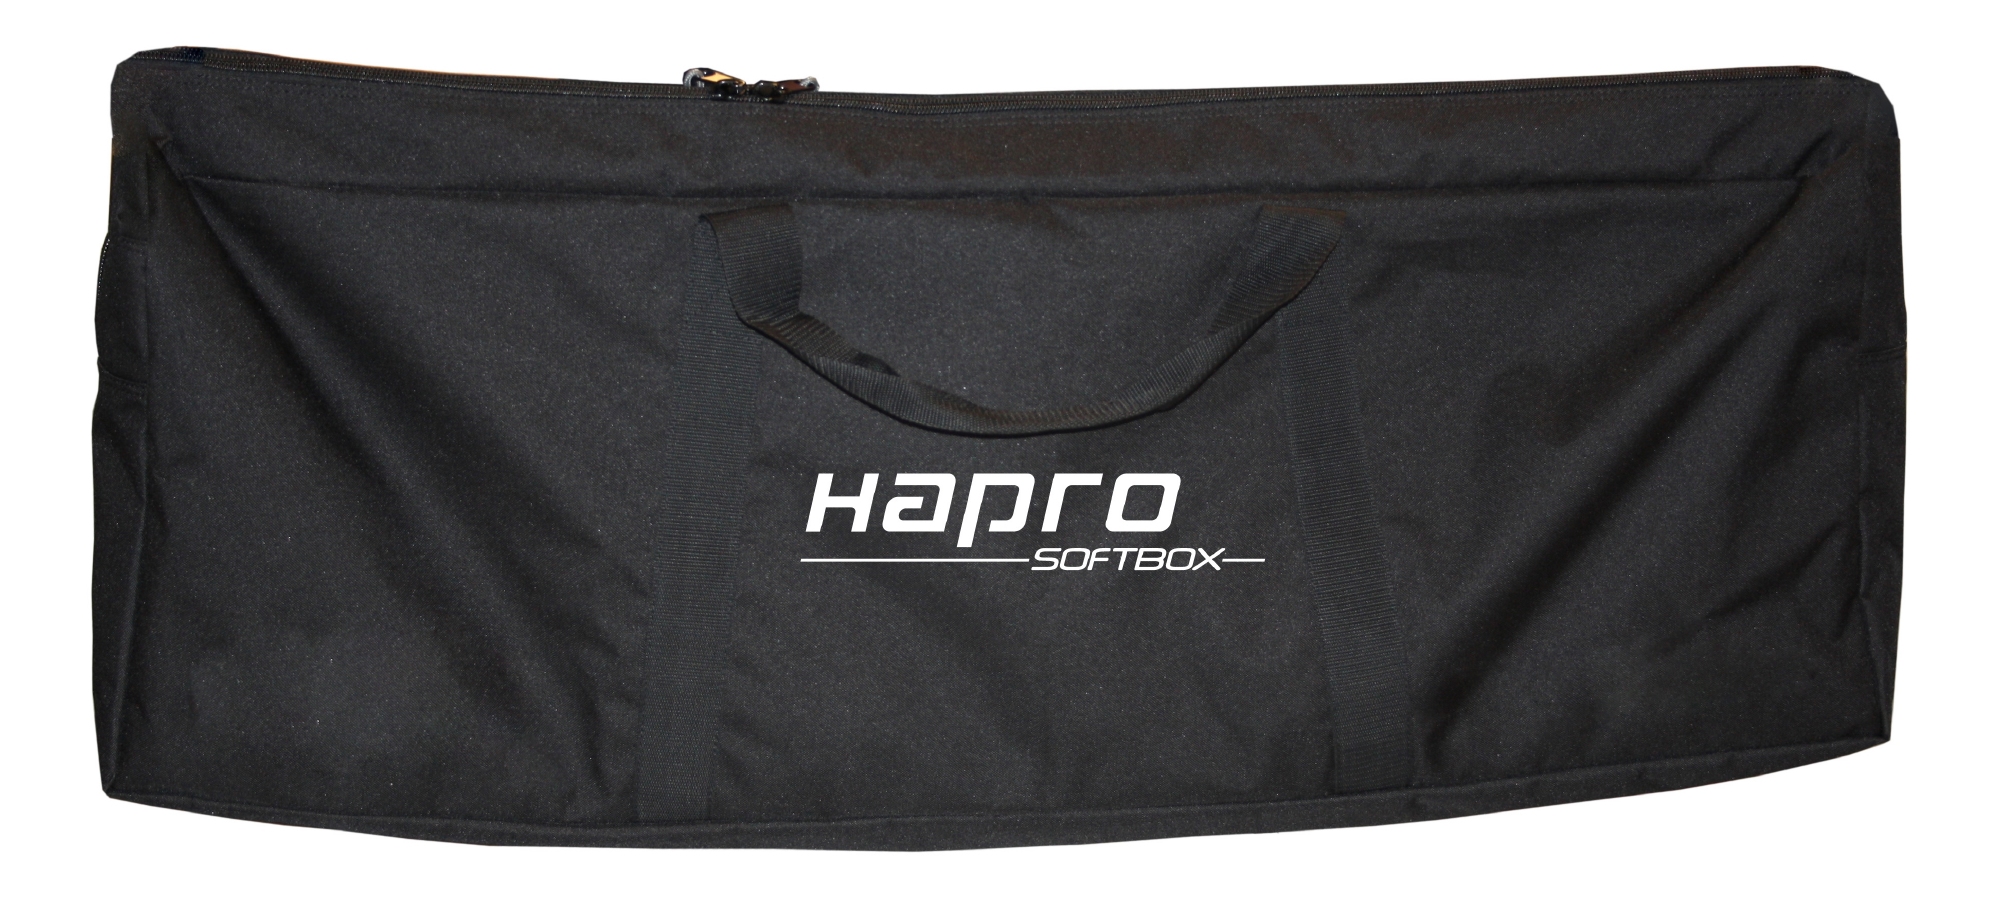 Hapro Softbox 570L